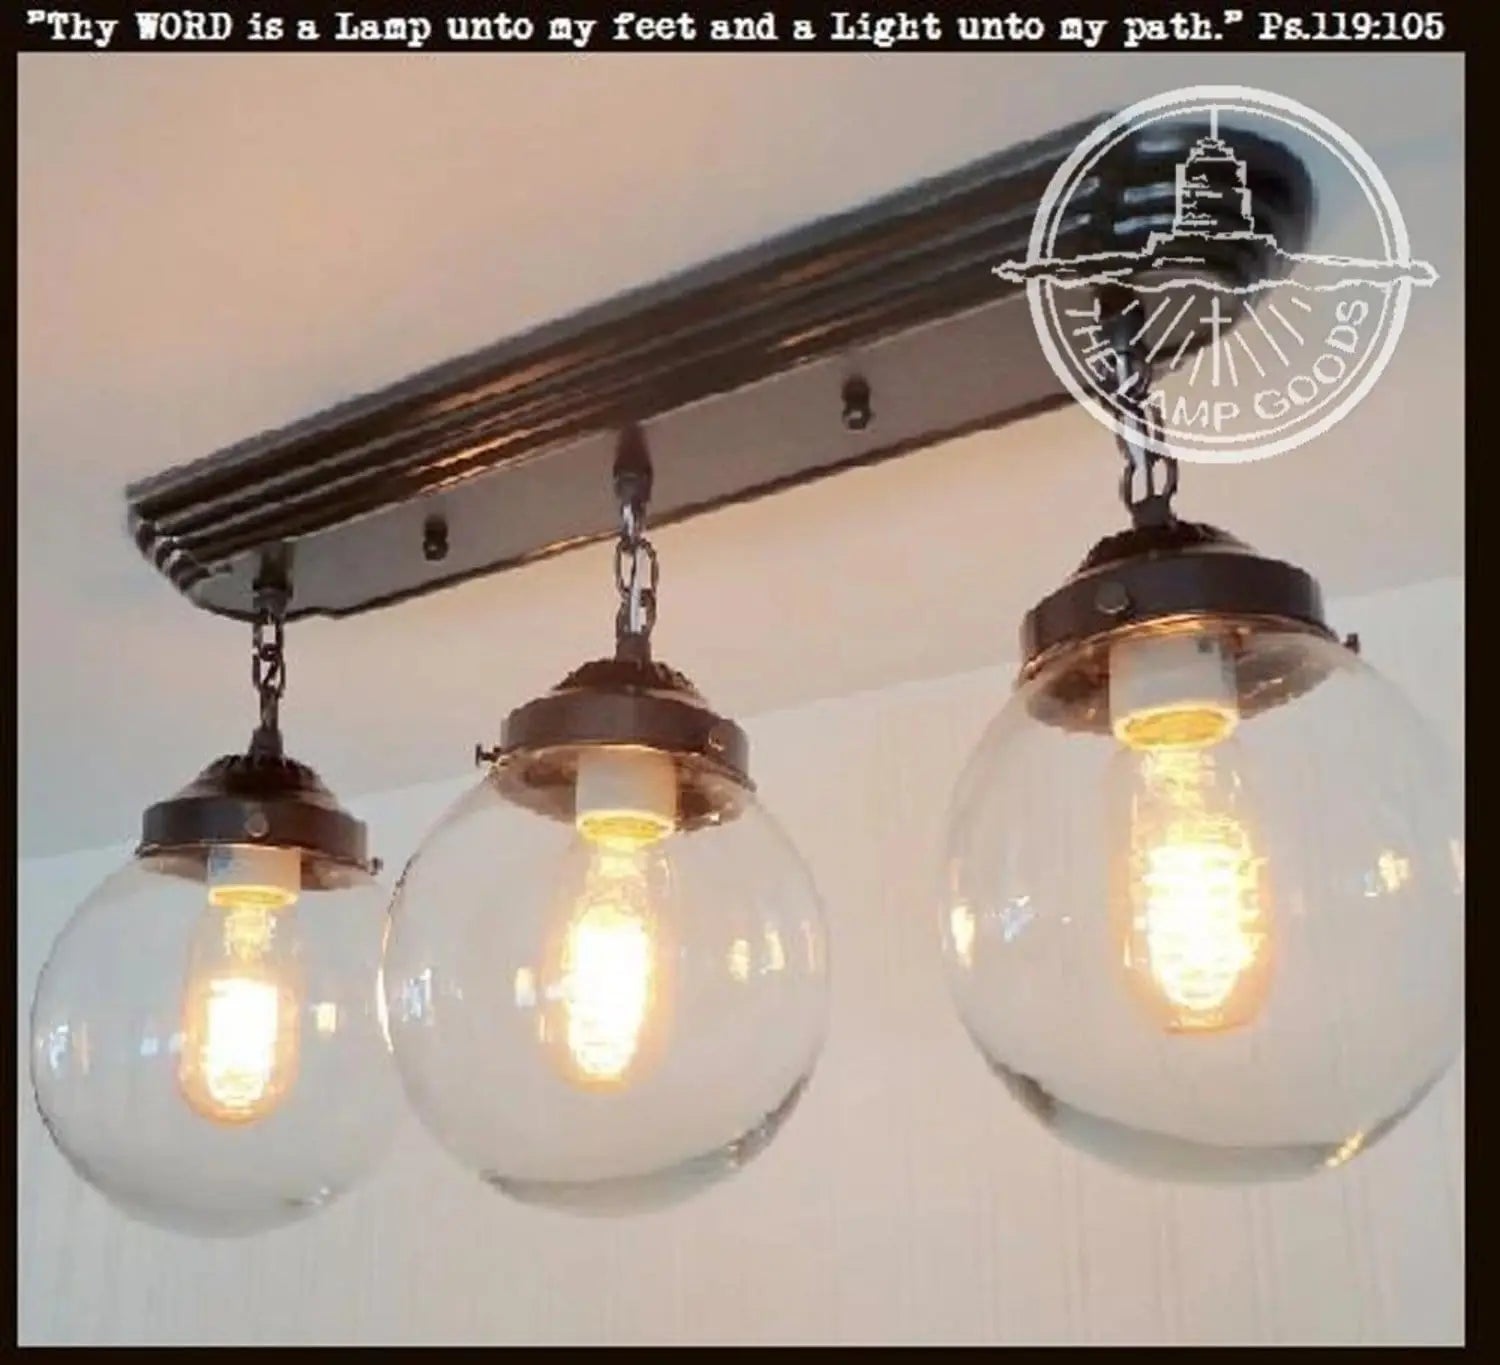 Biddeford II. Modern Ceiling Light Fixtures Rectangular Trio - The Lamp Goods